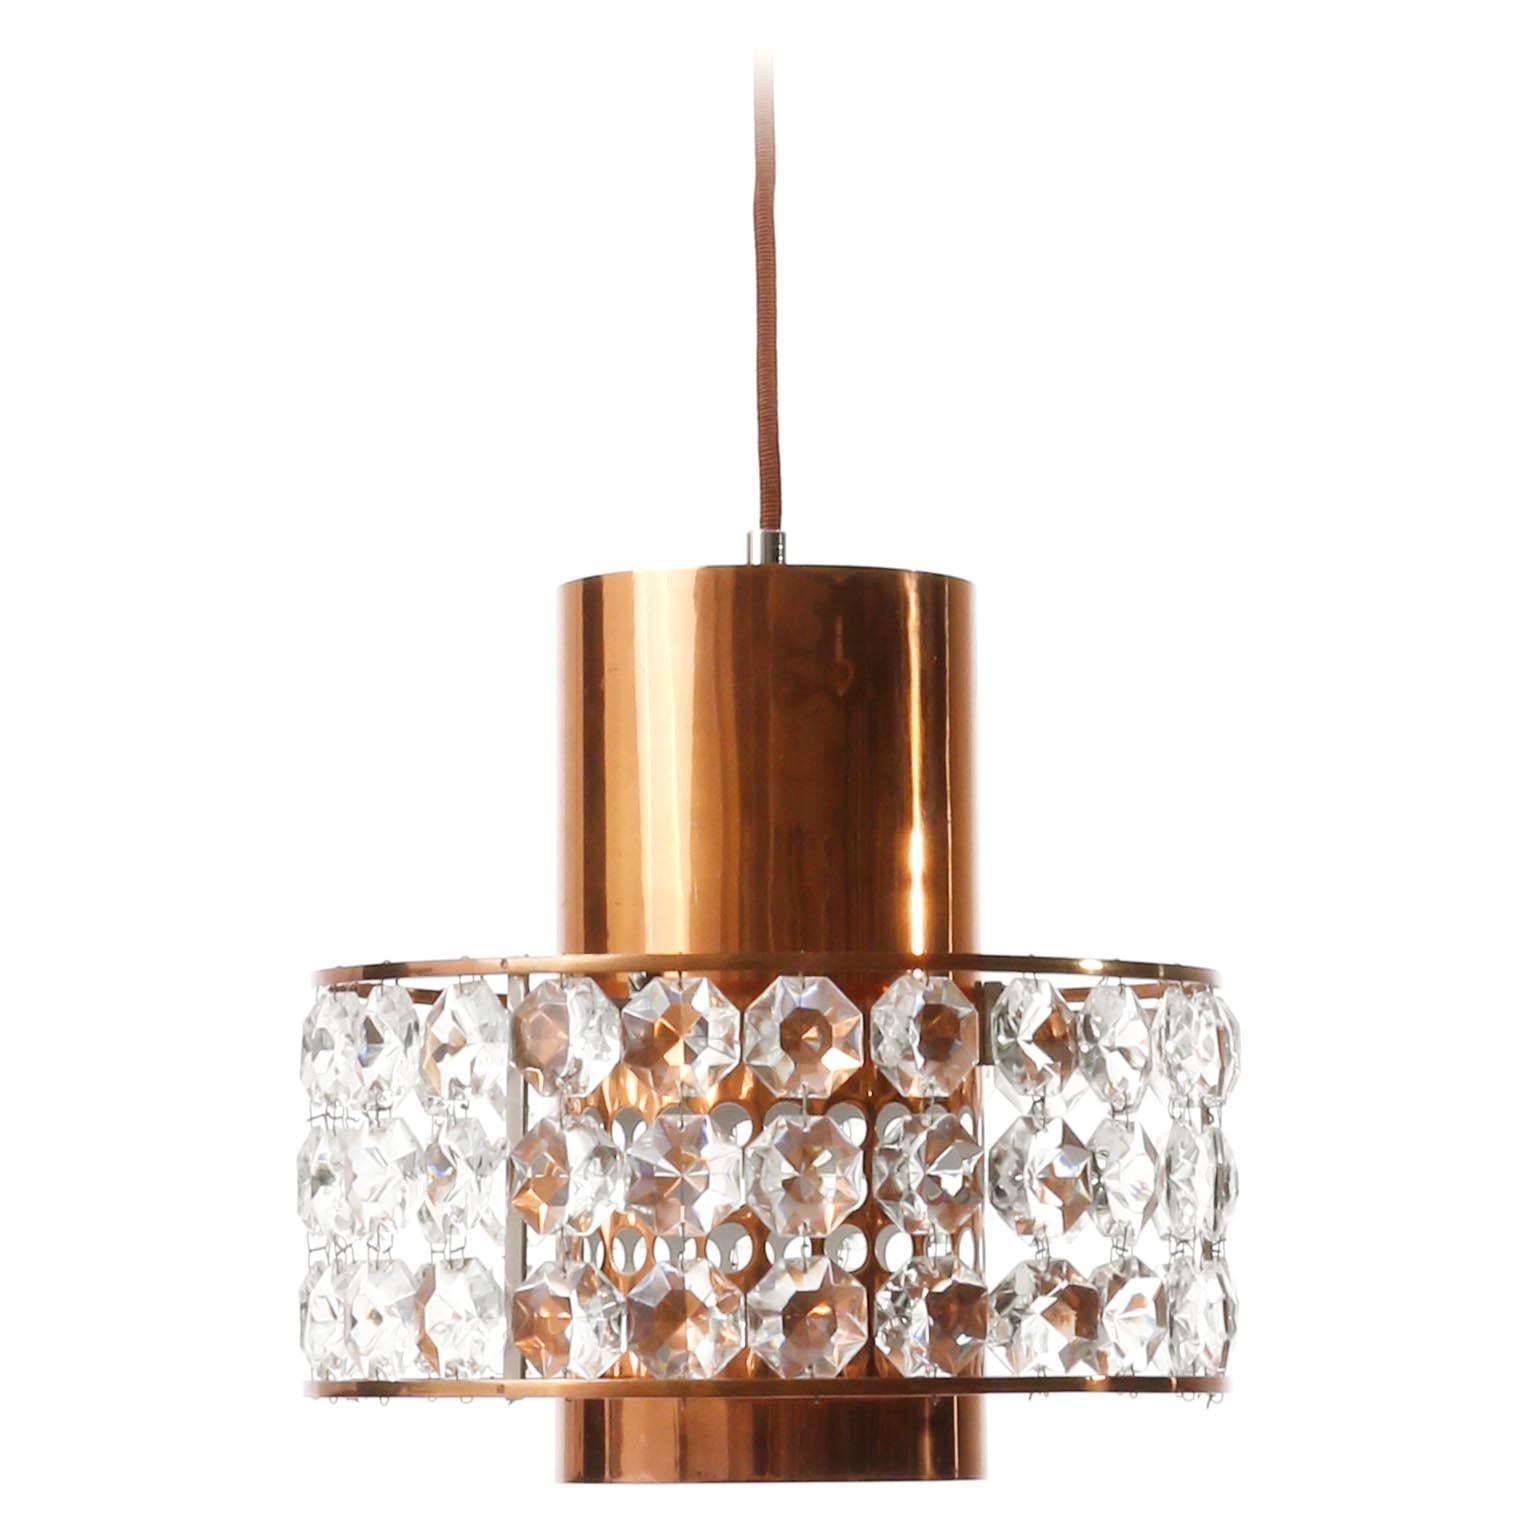 Austrian Bakalowits Pendant Light Lantern, Copper Nickel Crystal Glass, 1960s, 1 of 3 For Sale